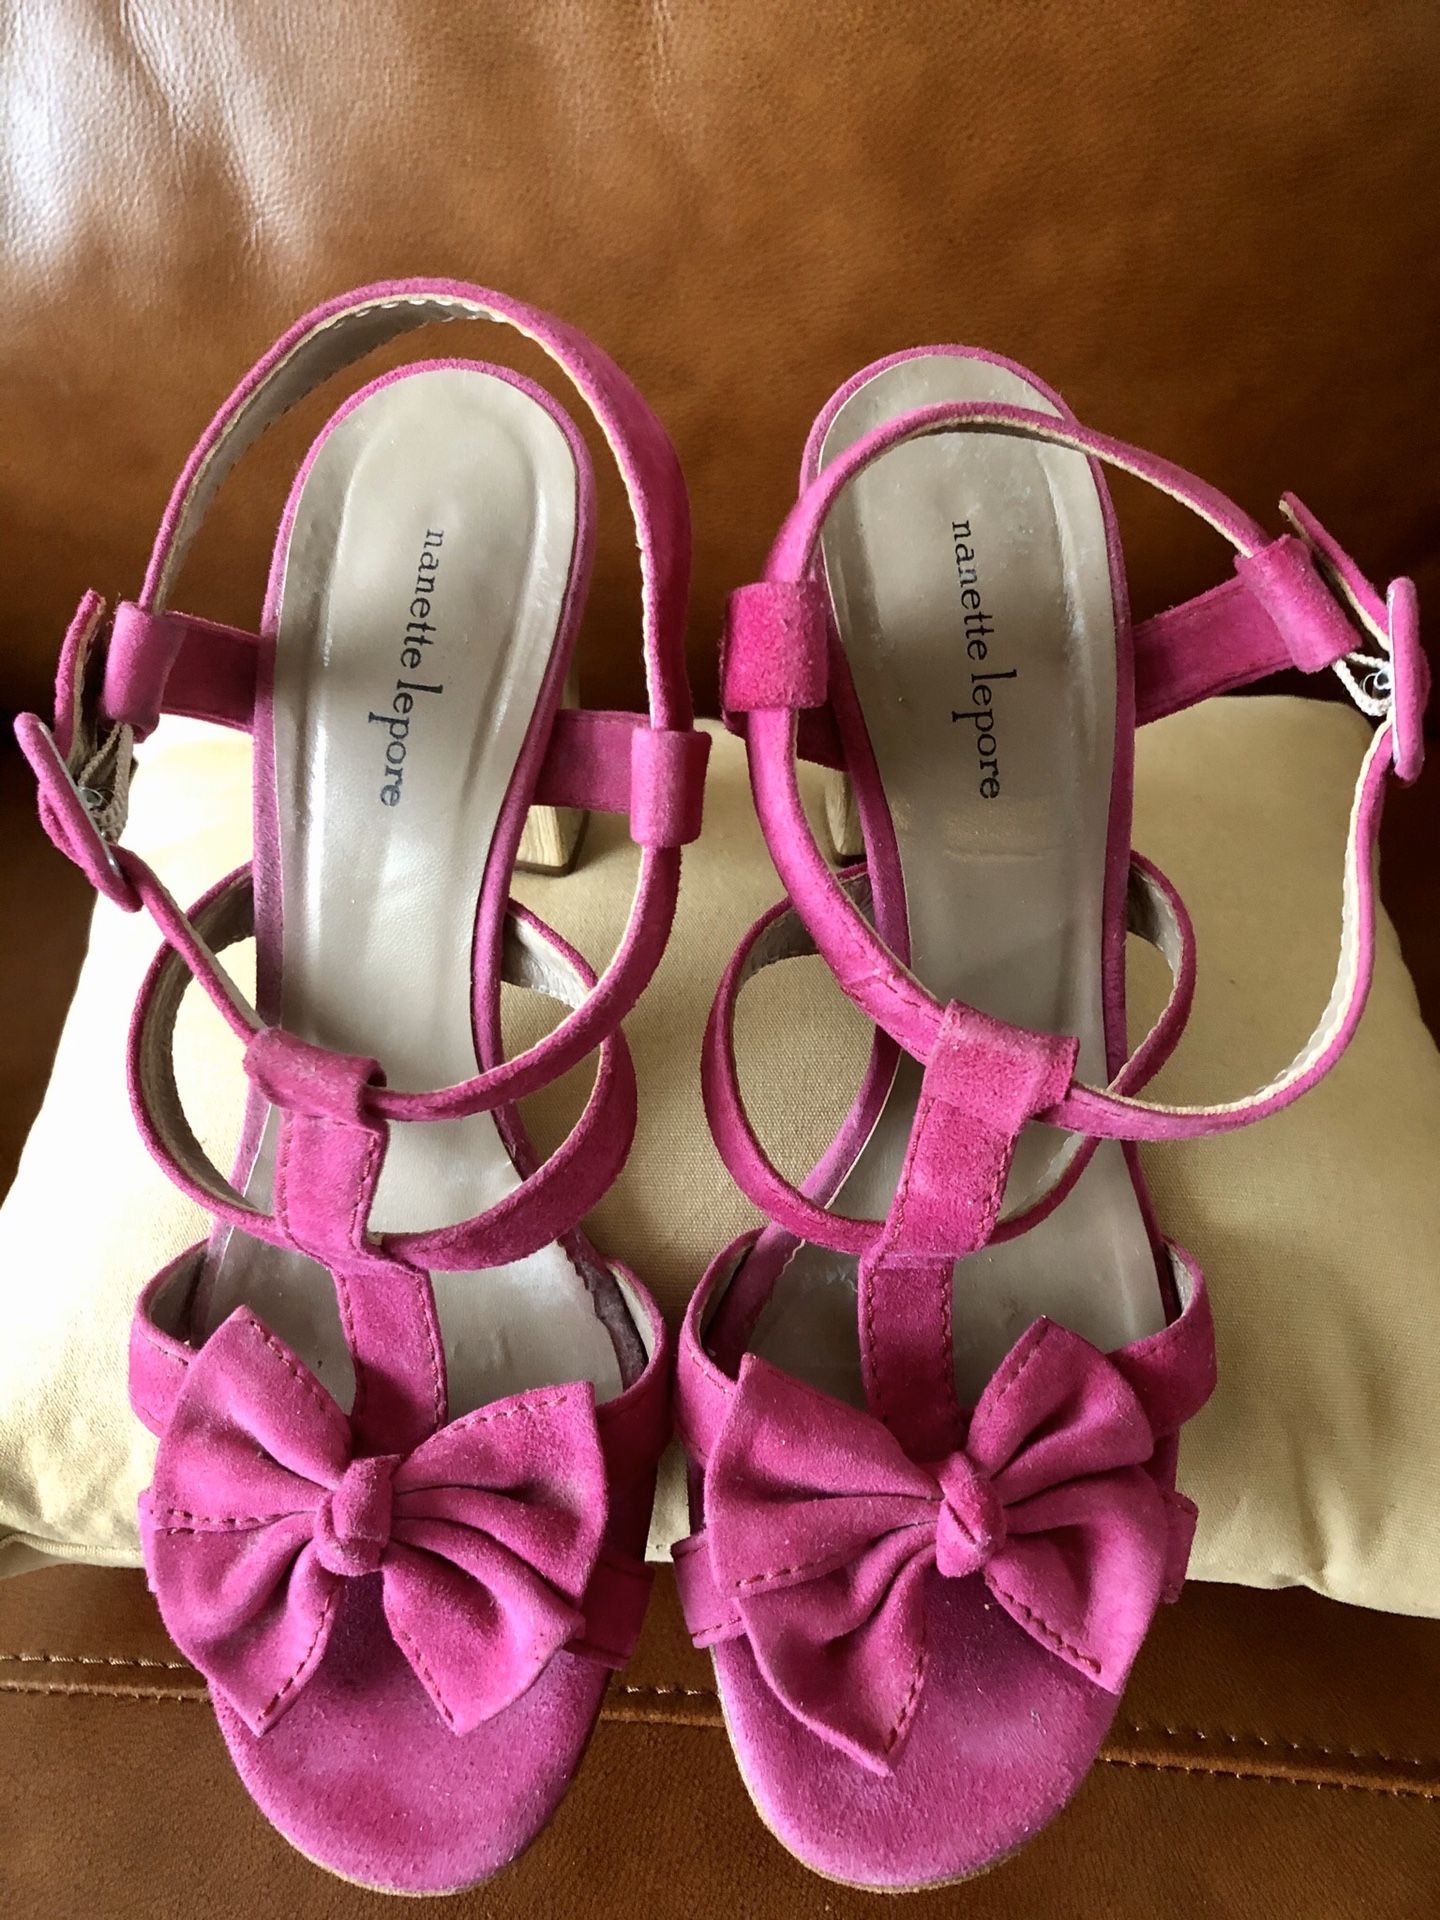 Nanette Lepore brand suede high heel sandals